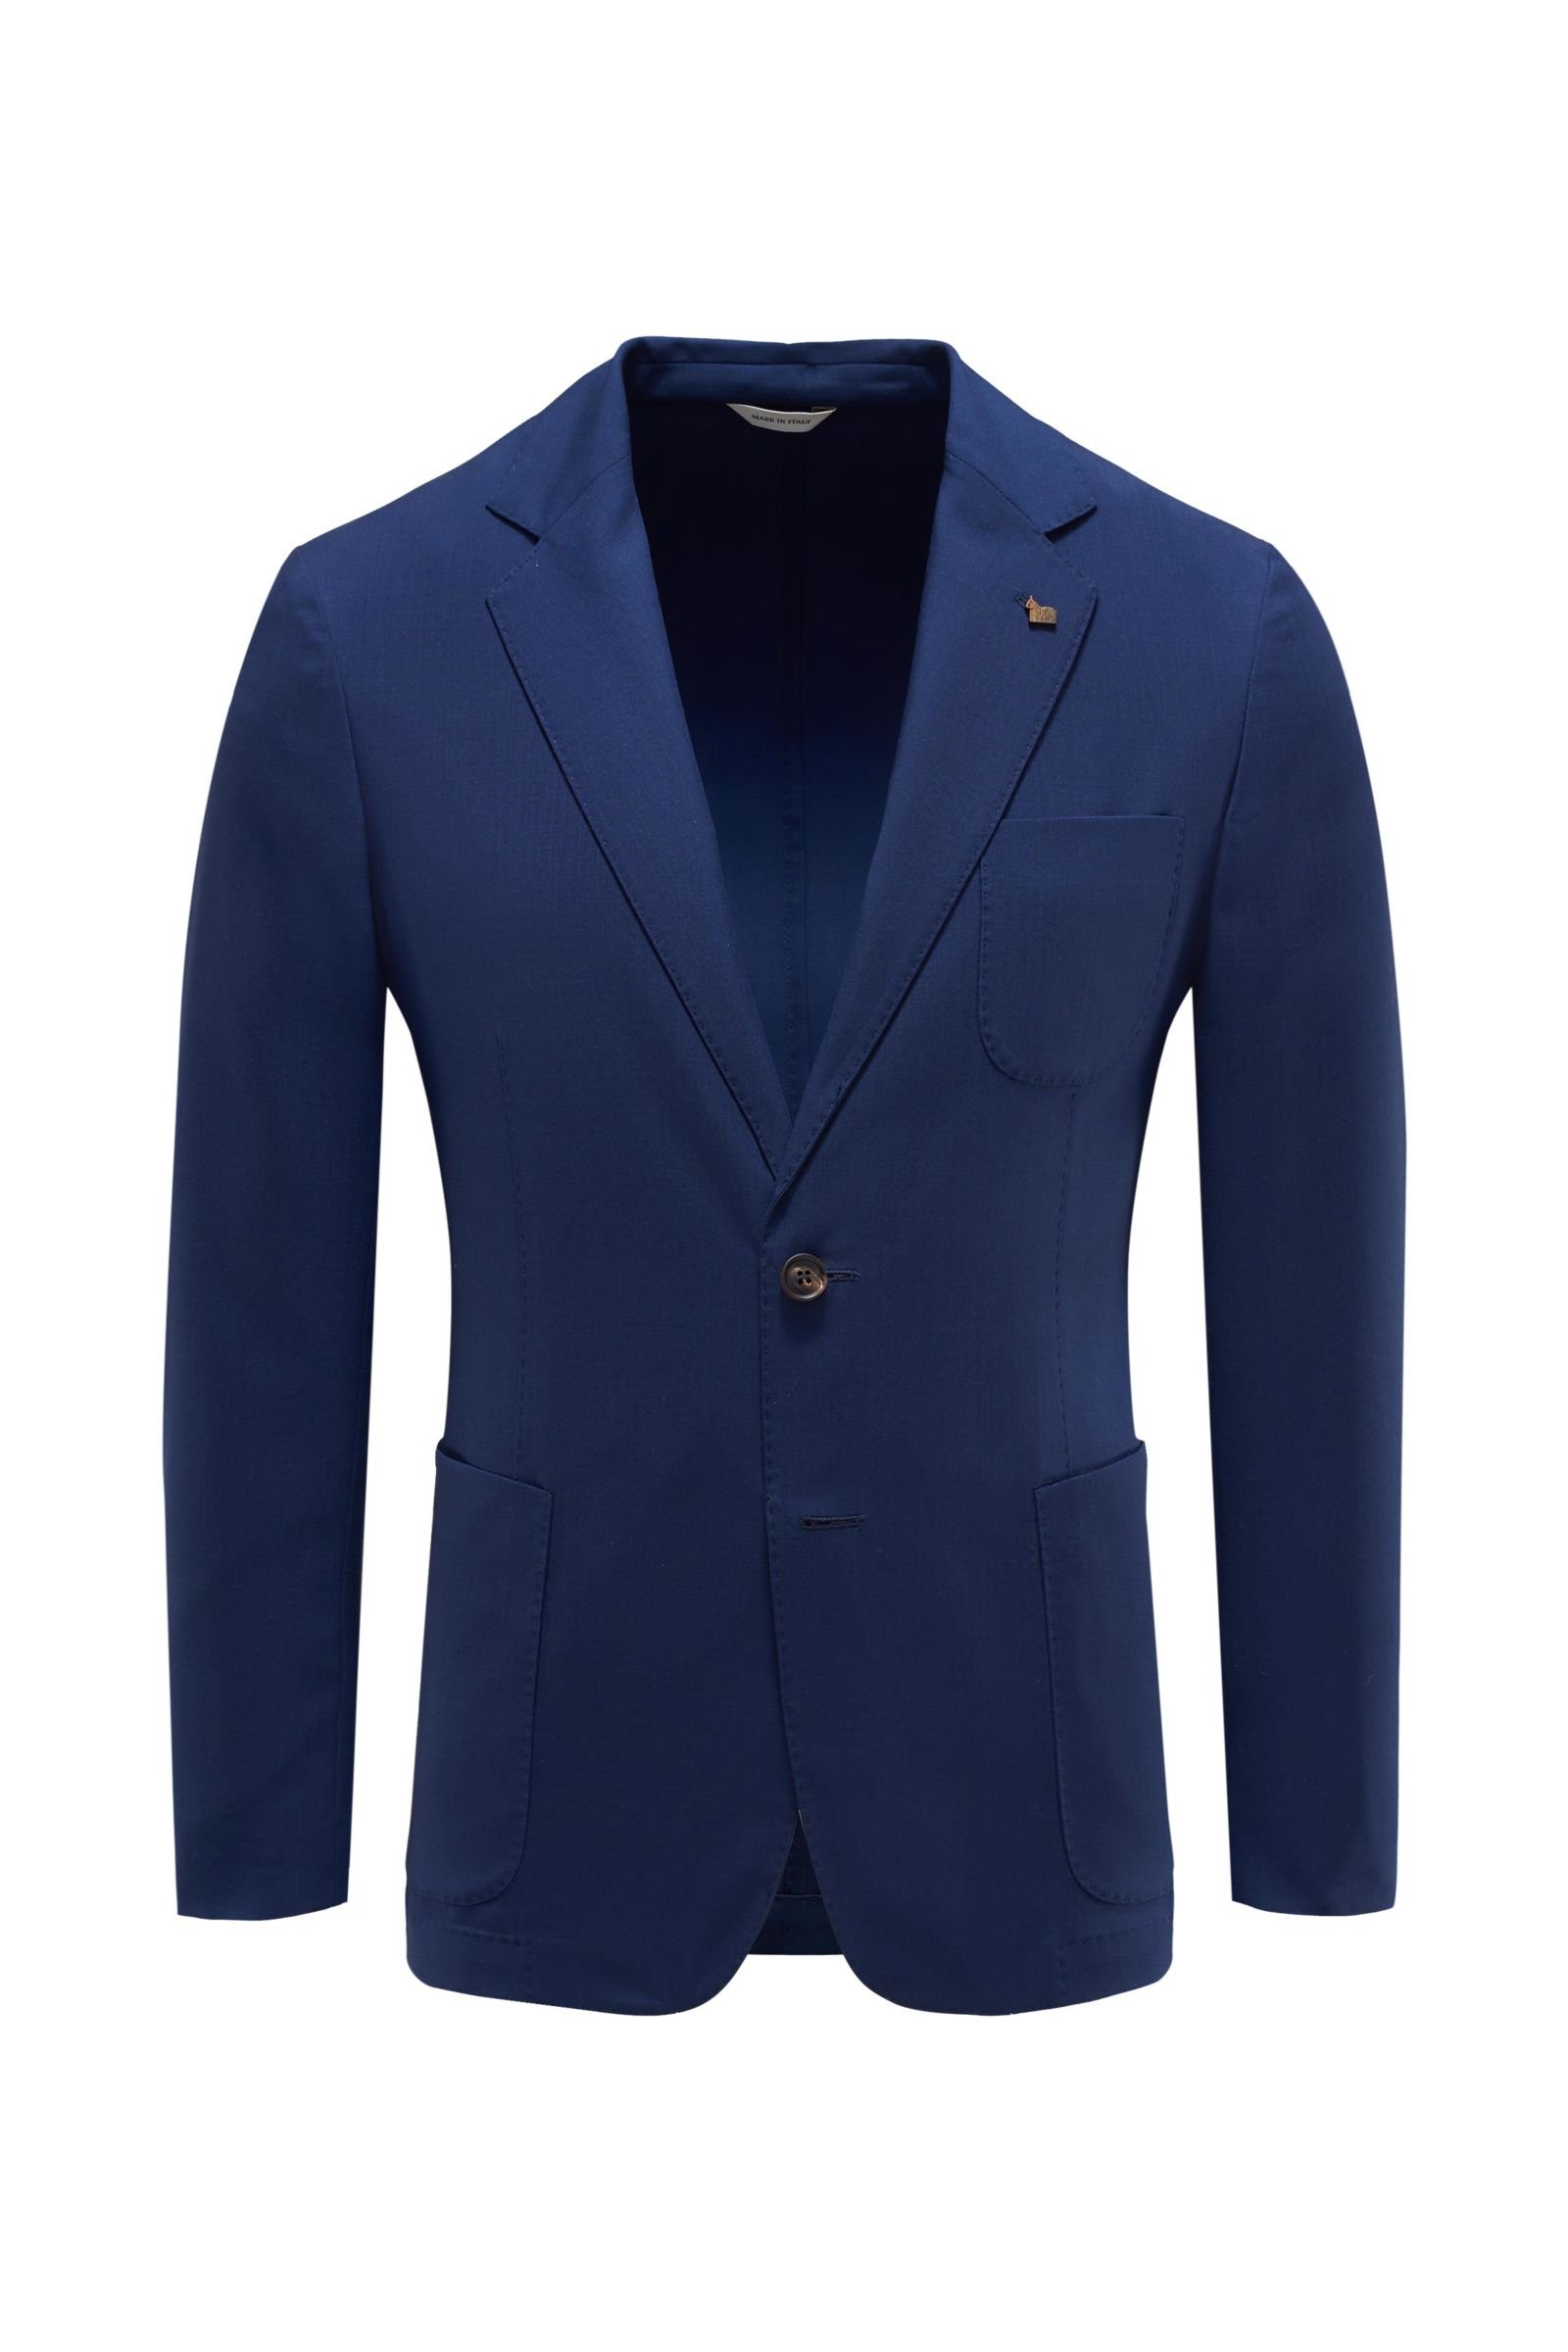 Cashmere smart-casual jacket dark blue